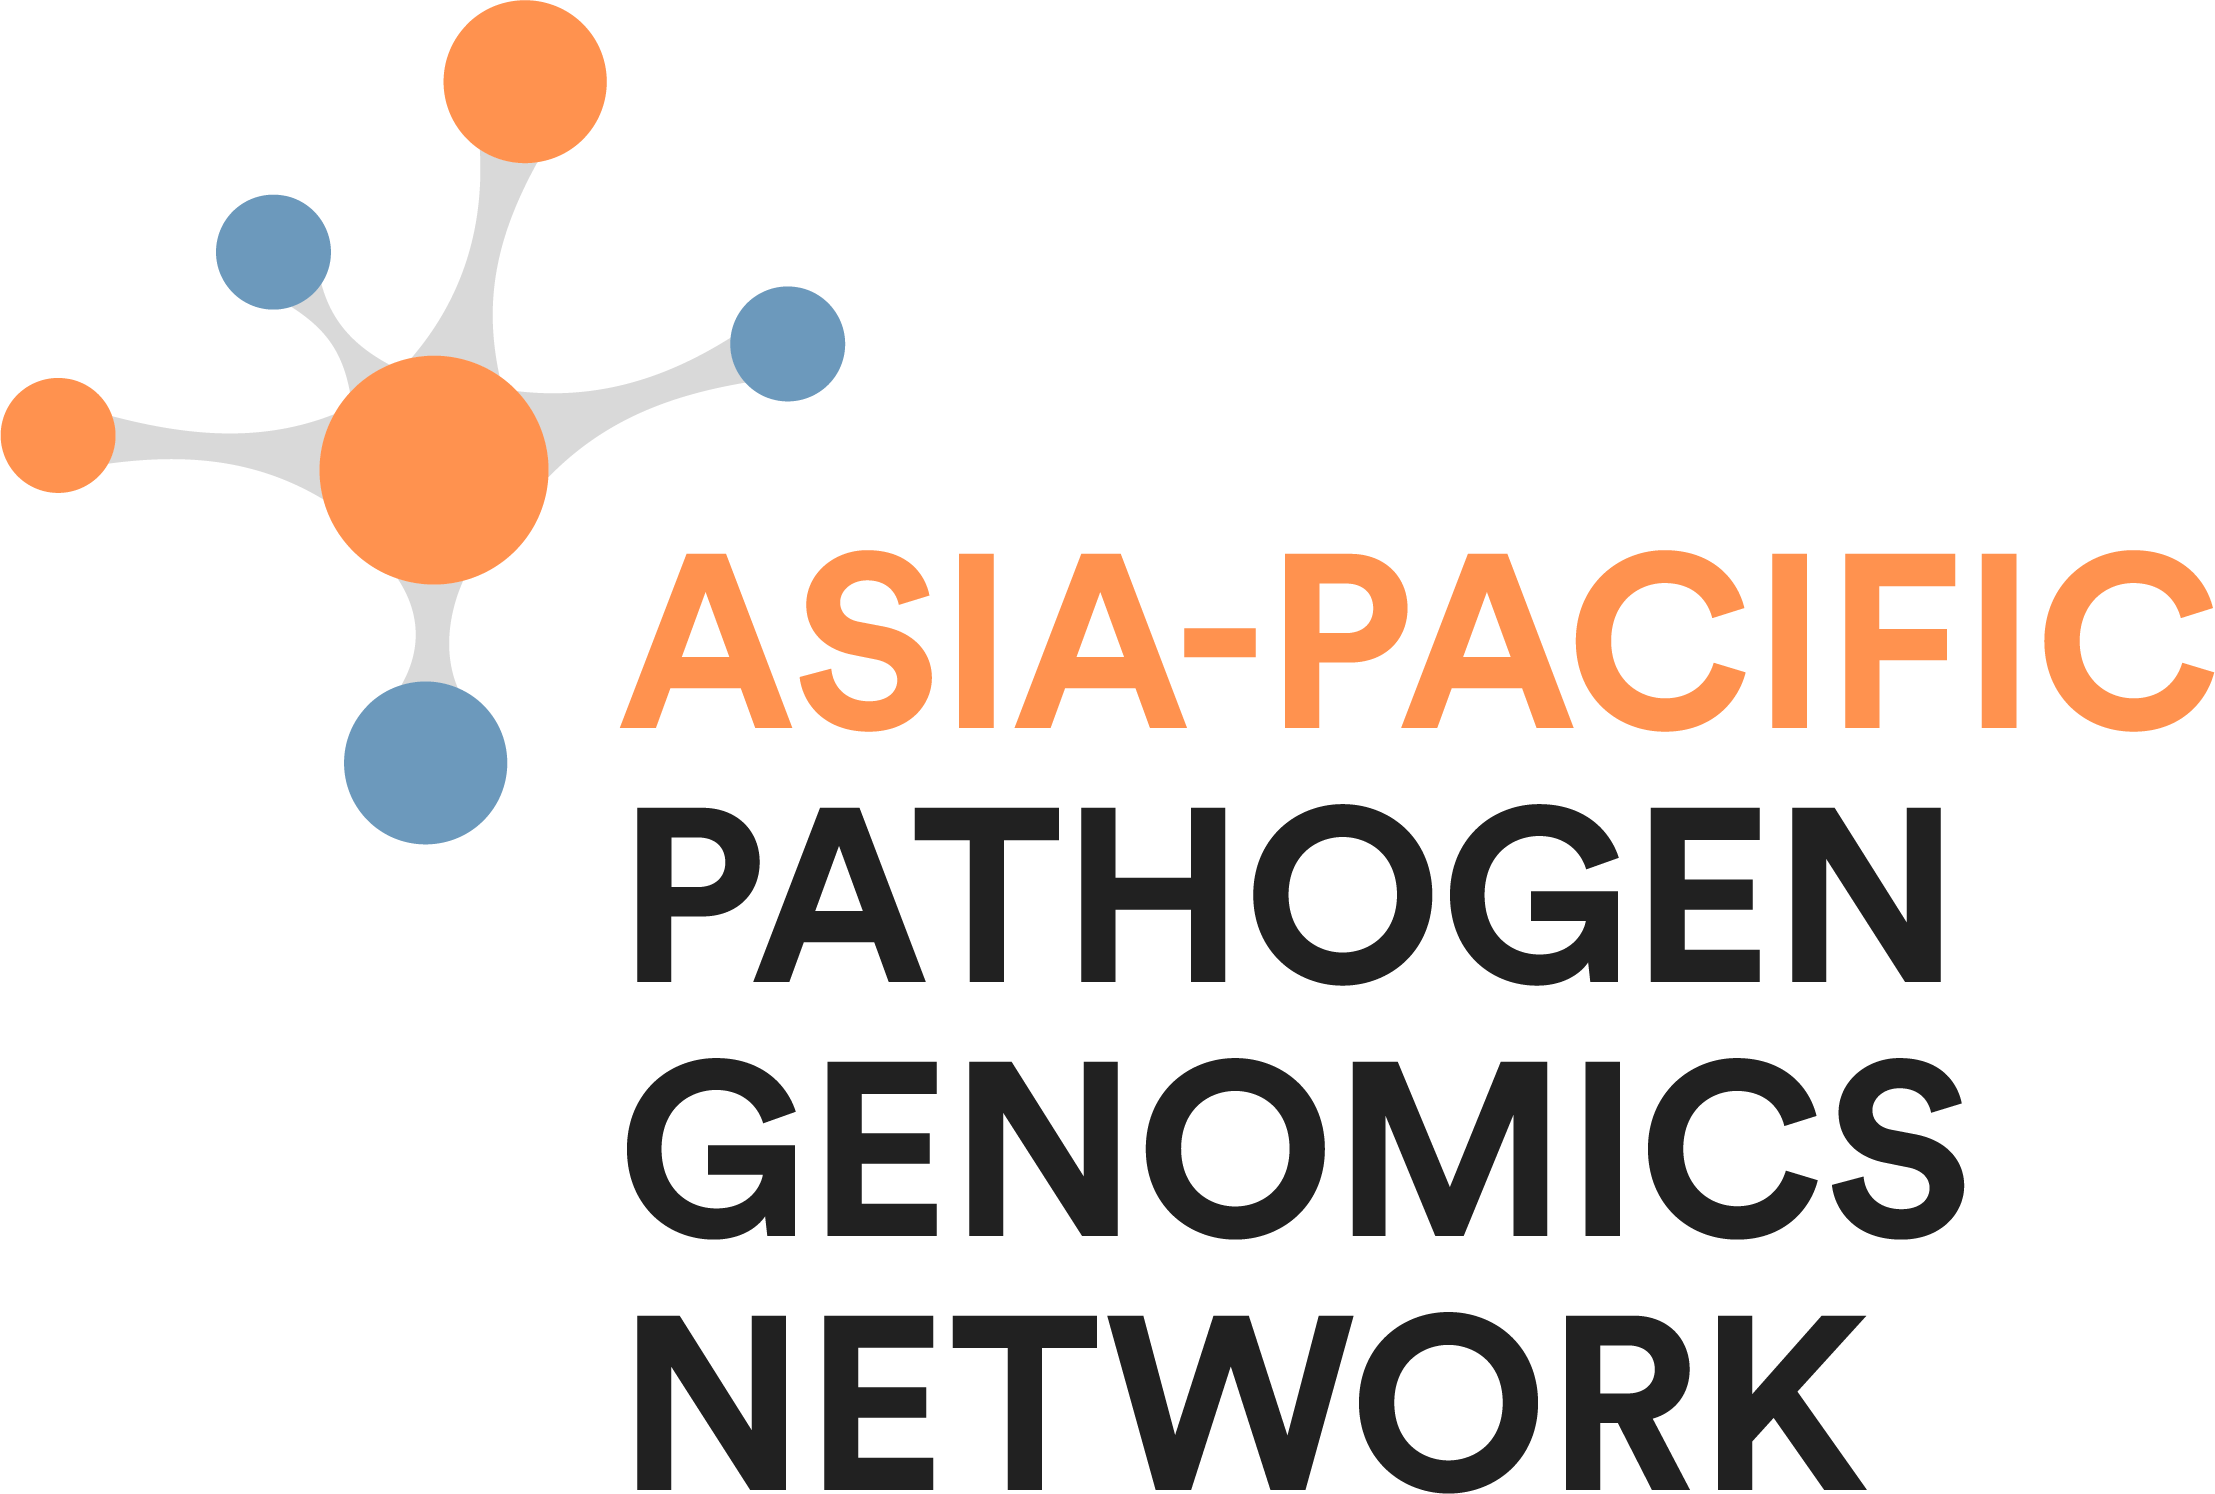 Asia-Pacific Pathogen Genomics Network